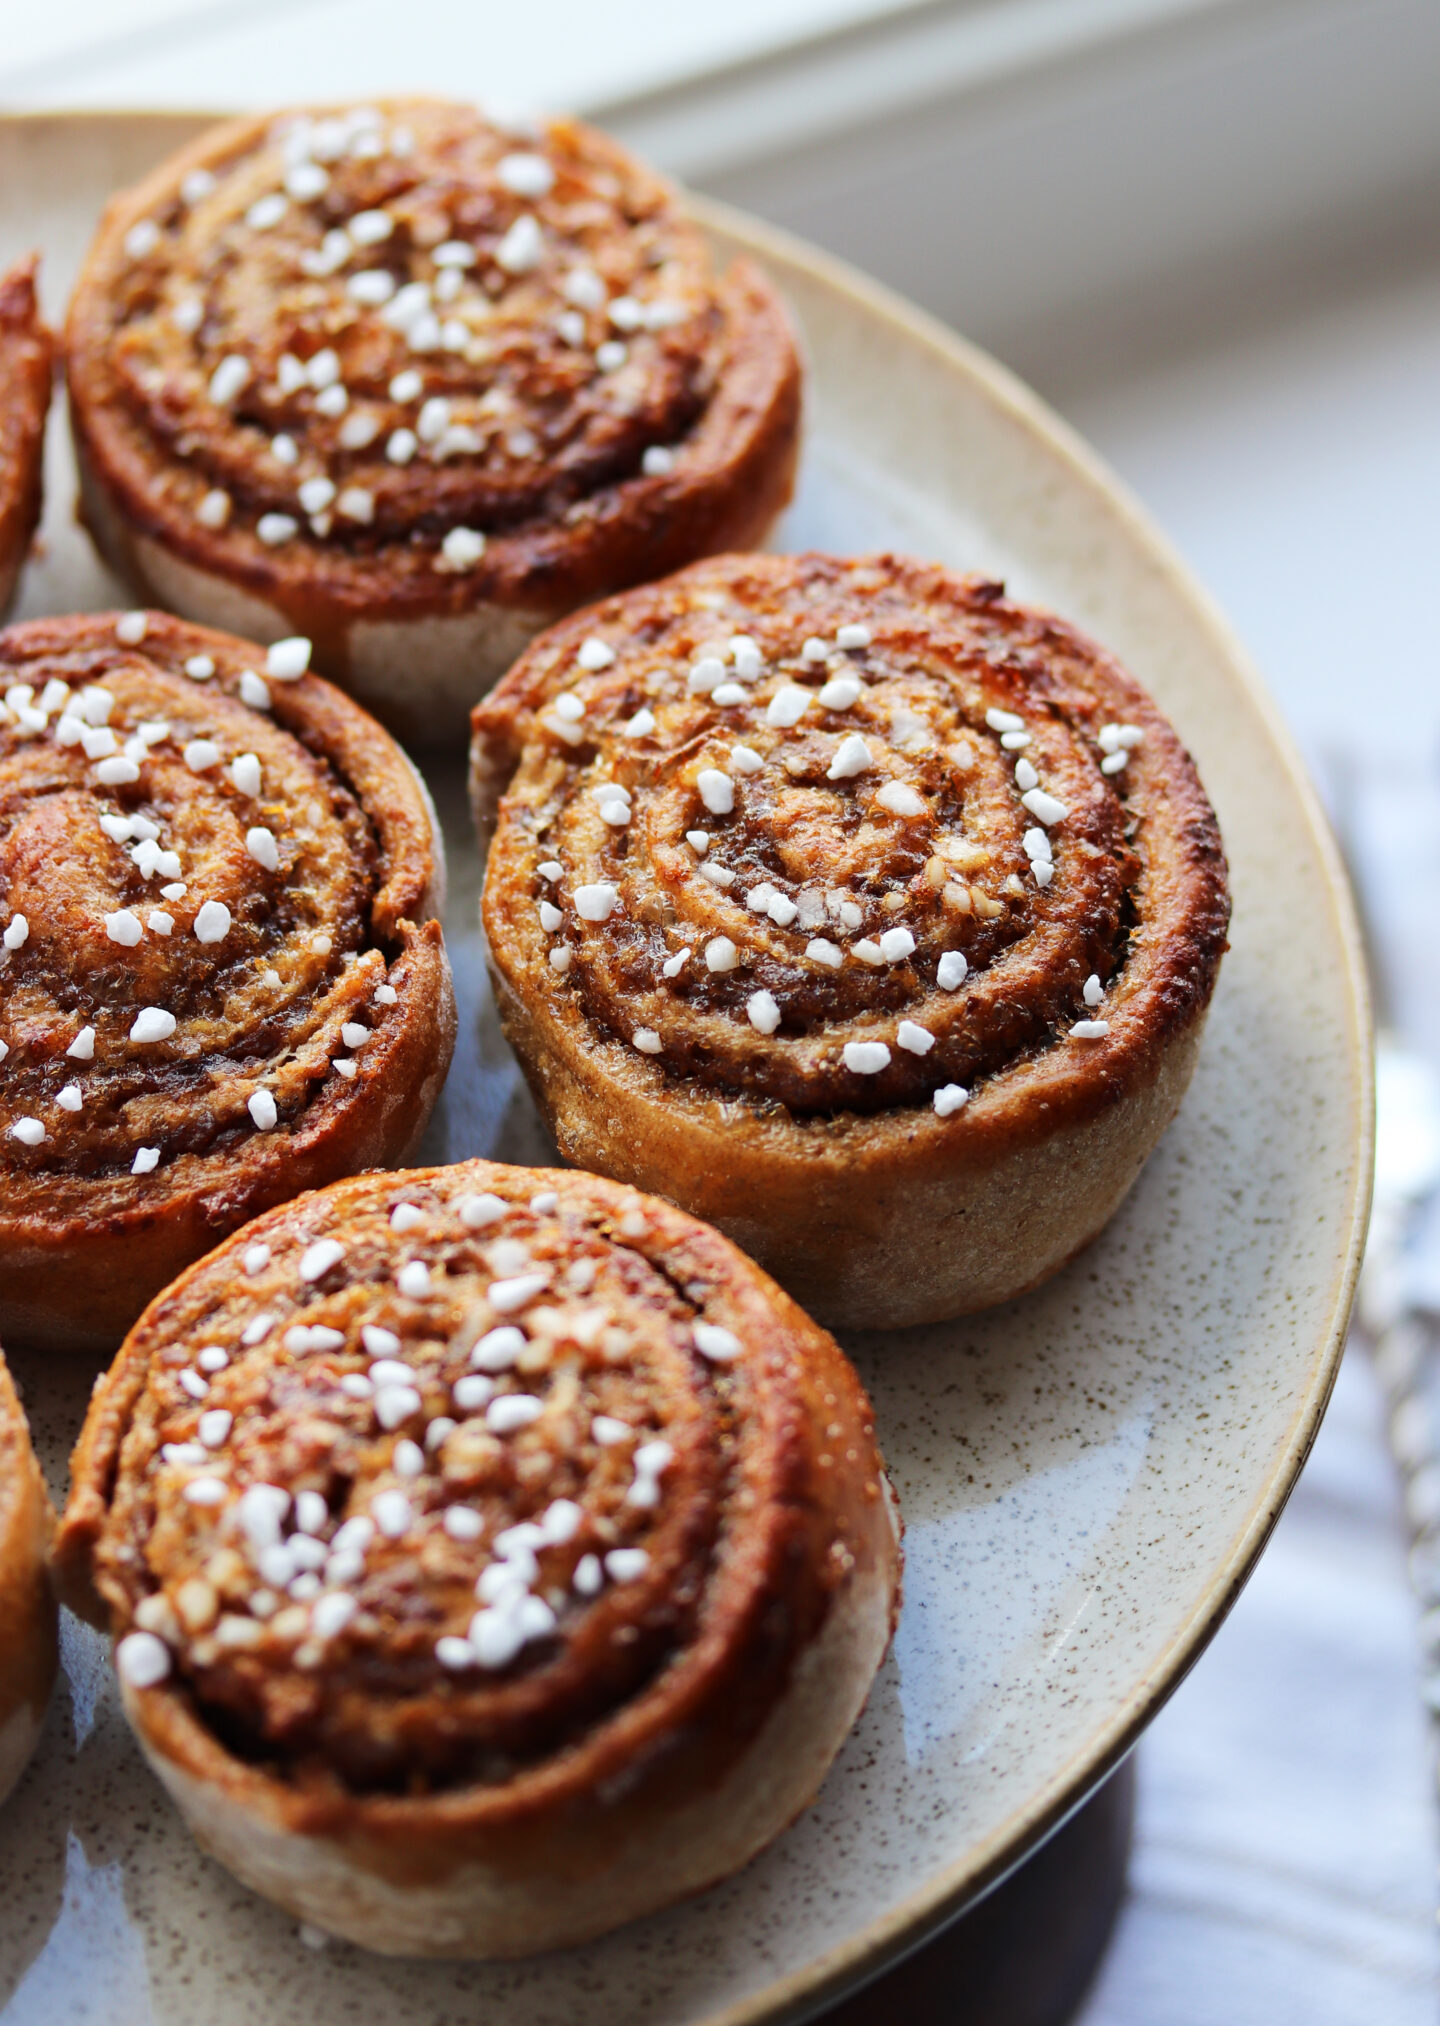 Classic Swedish Cinnamon Buns – on the Healthier Side